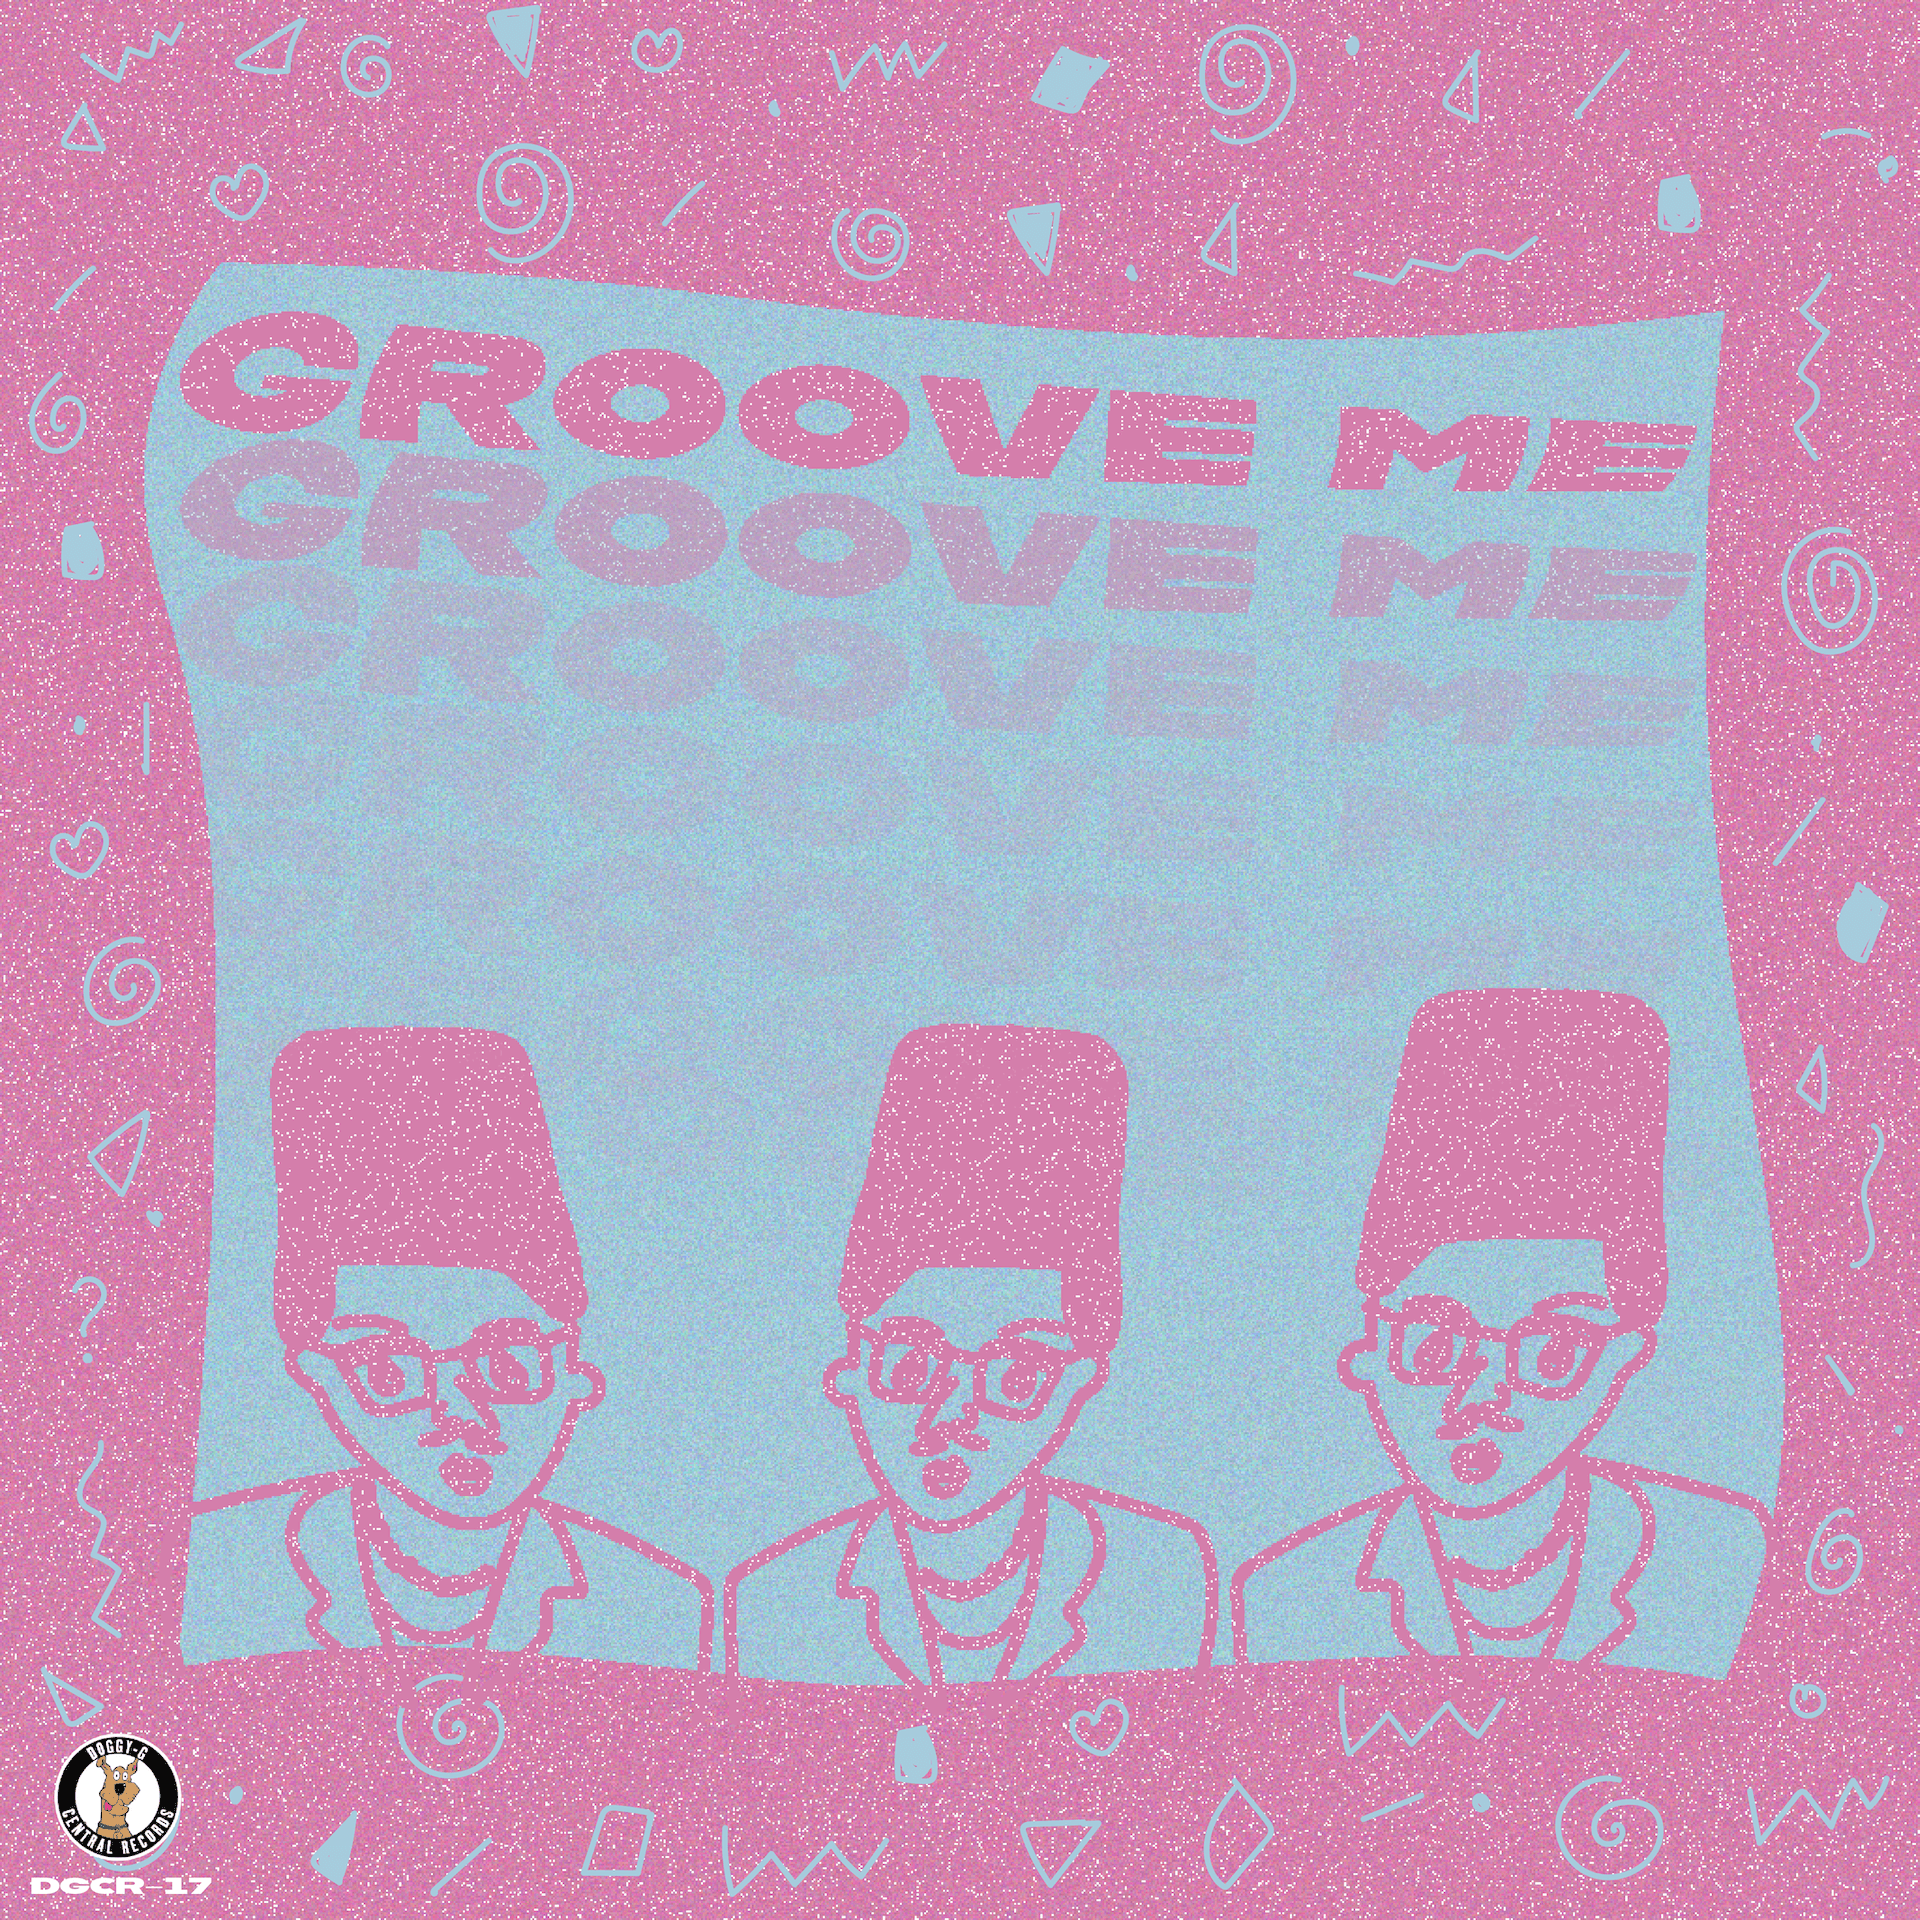 chancylemon×カミノ・ザ・ファンク、コラボ楽曲第3弾「Groove me」がリリース｜大阪での初パフォーマンスが決定 music221216-grooveme2